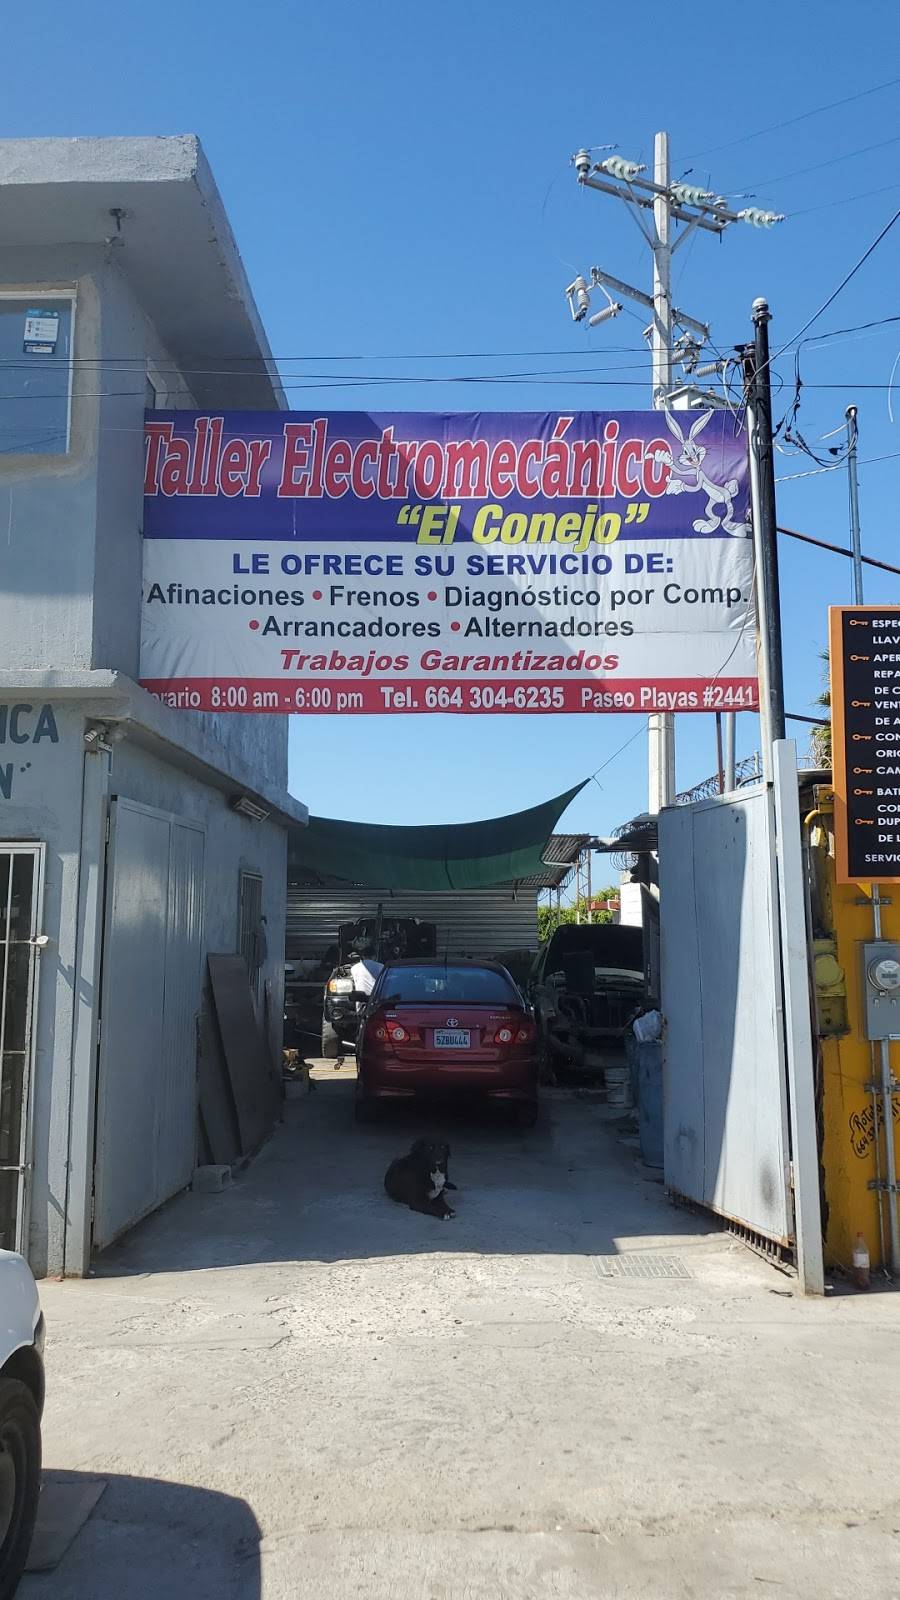 Taller Electromecánico "El Conejo | Paseo Playas de Tijuana 2441, Playas, Playas de Tijuana, 22517 Tijuana, B.C., Mexico | Phone: 664 304 6235